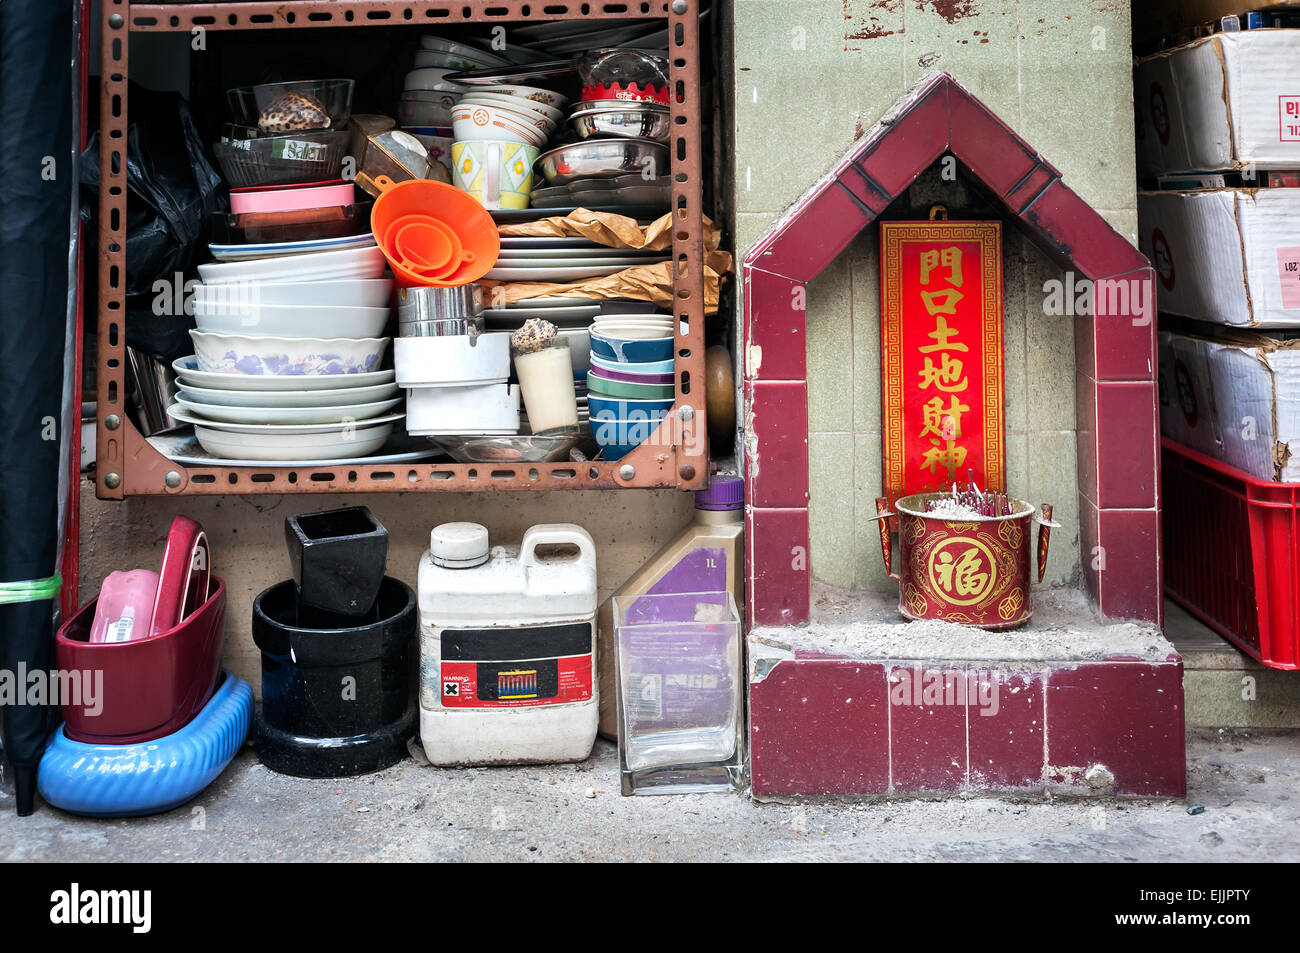 Street de culte sur Tai Ping Road, Hong Kong. Banque D'Images